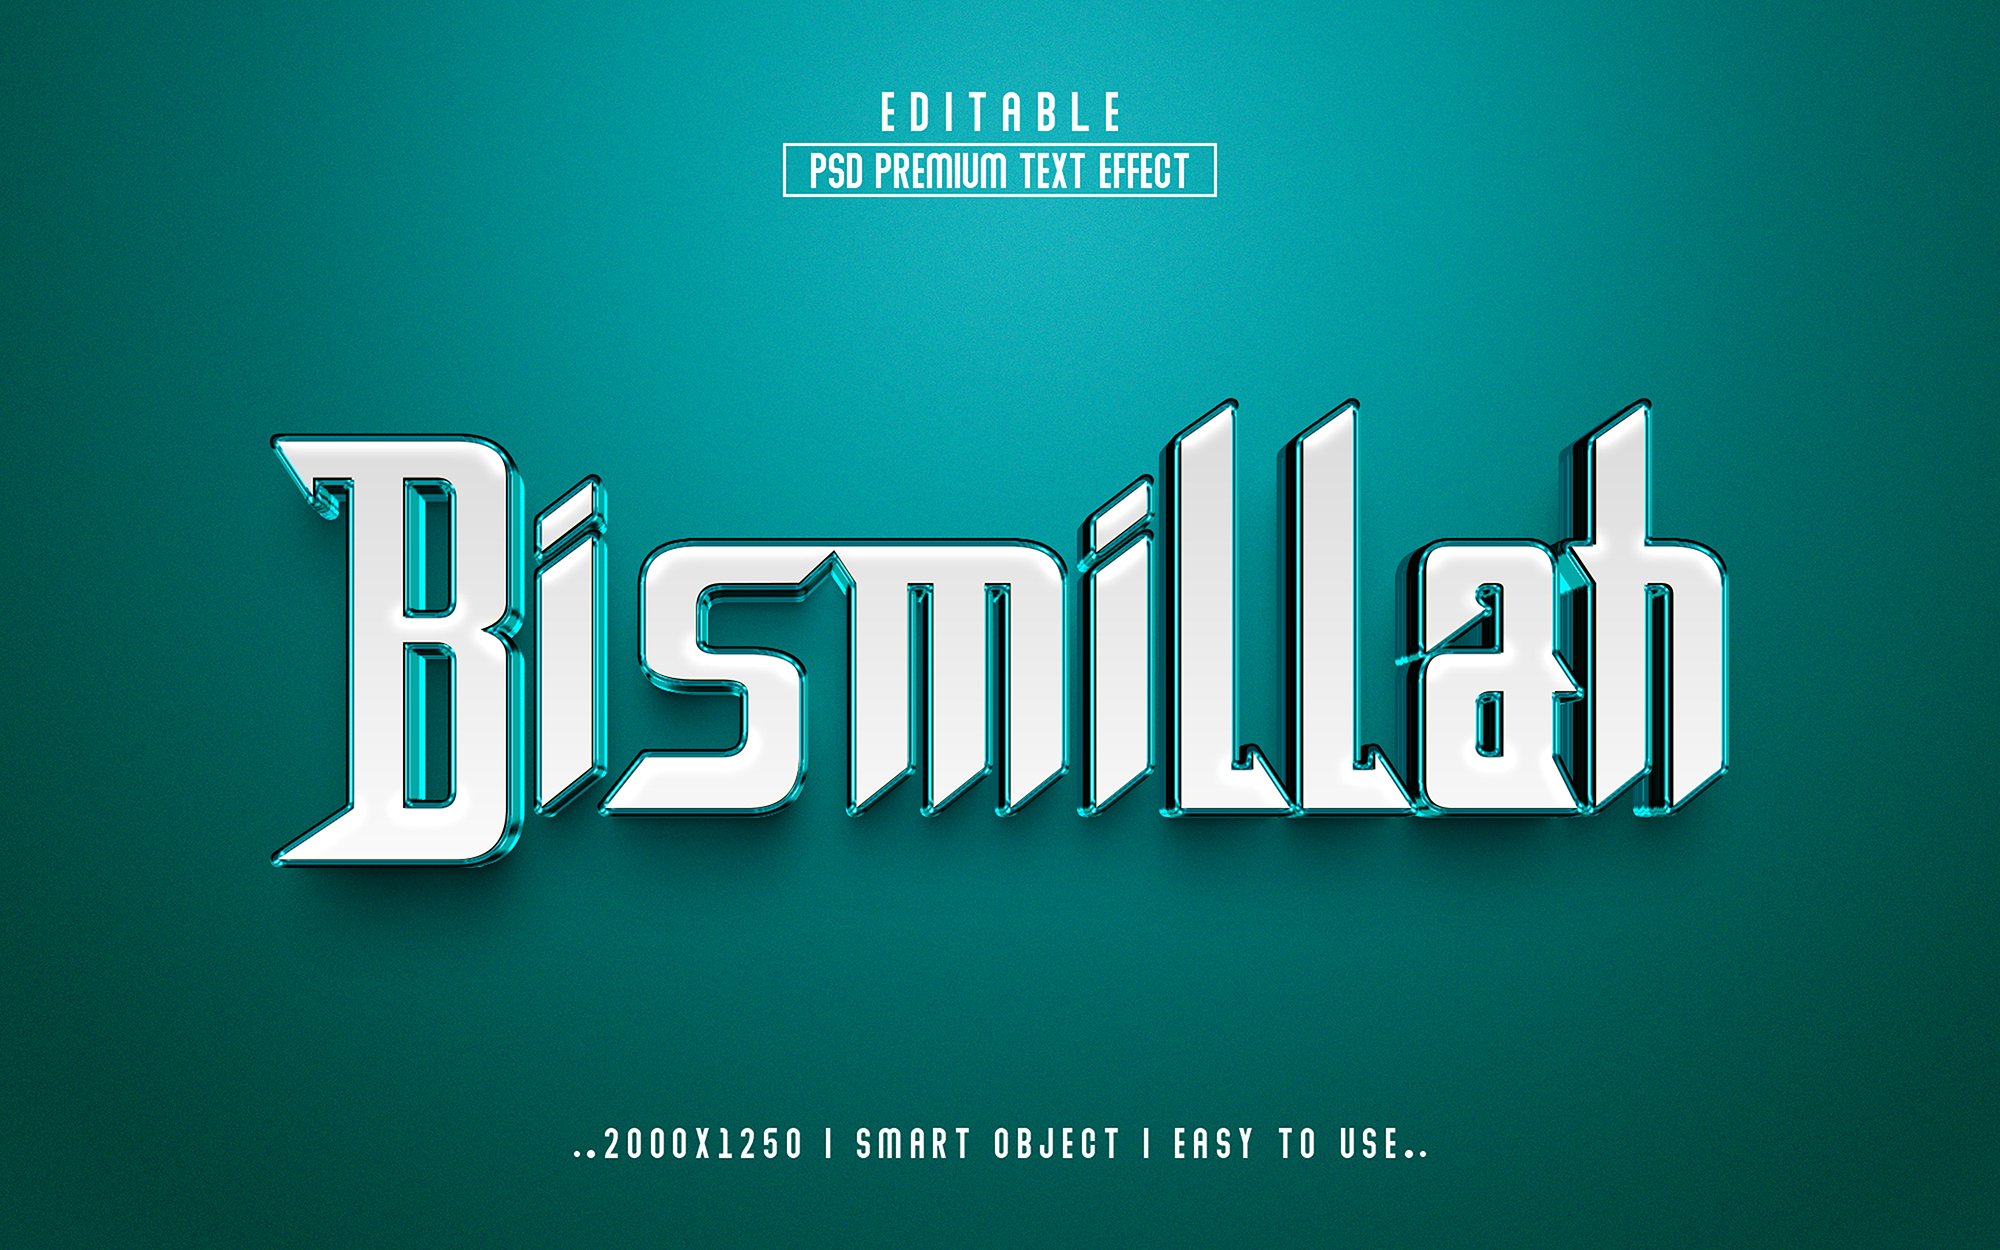 Bismillah 3D Editable Text Effectcover image.